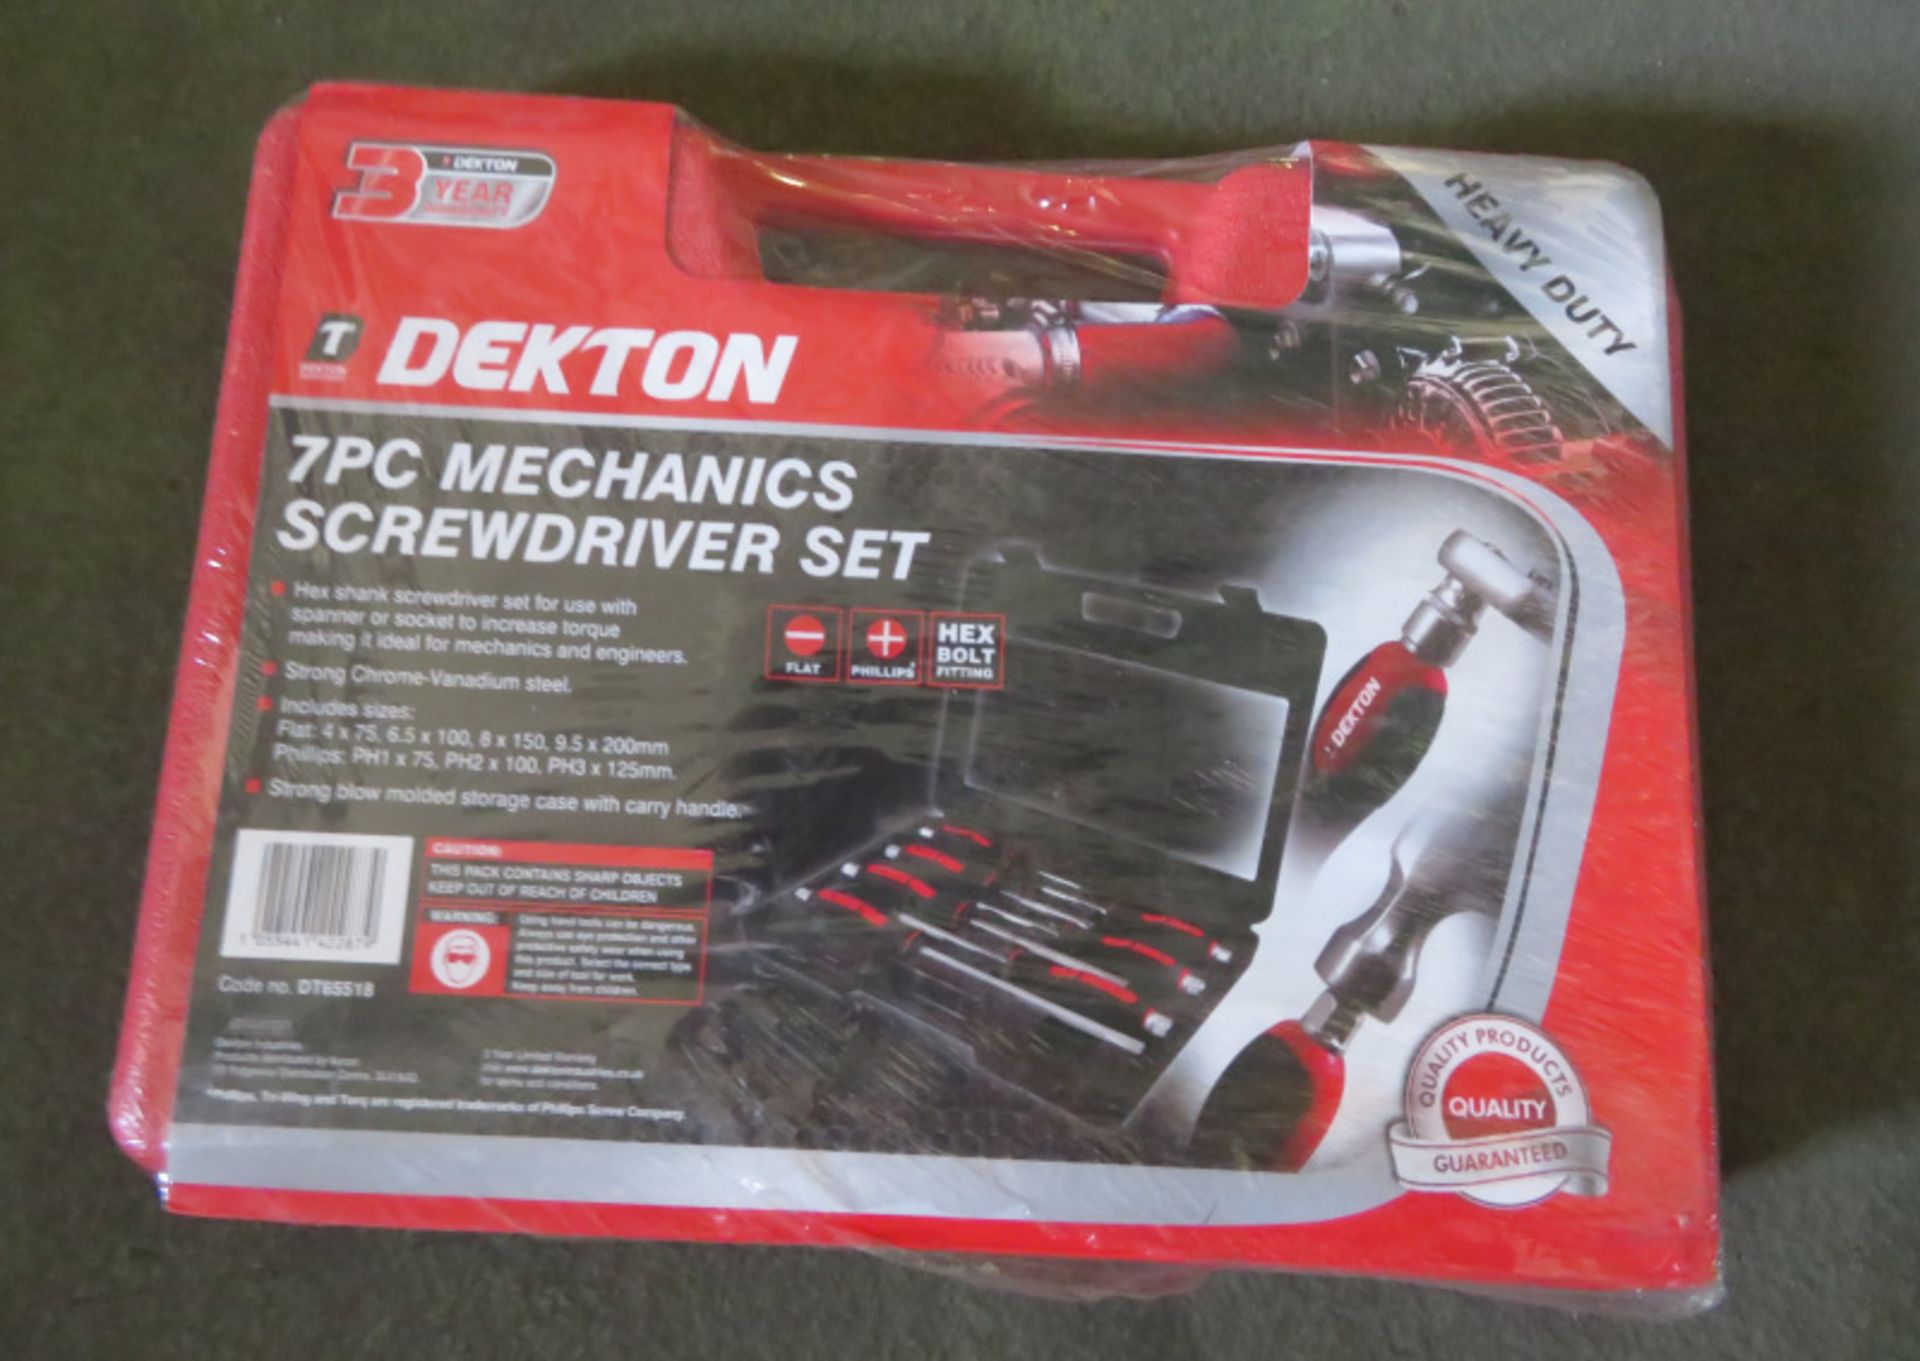 Dekton 7pc Mechanics Screwdriver Set - Image 3 of 3